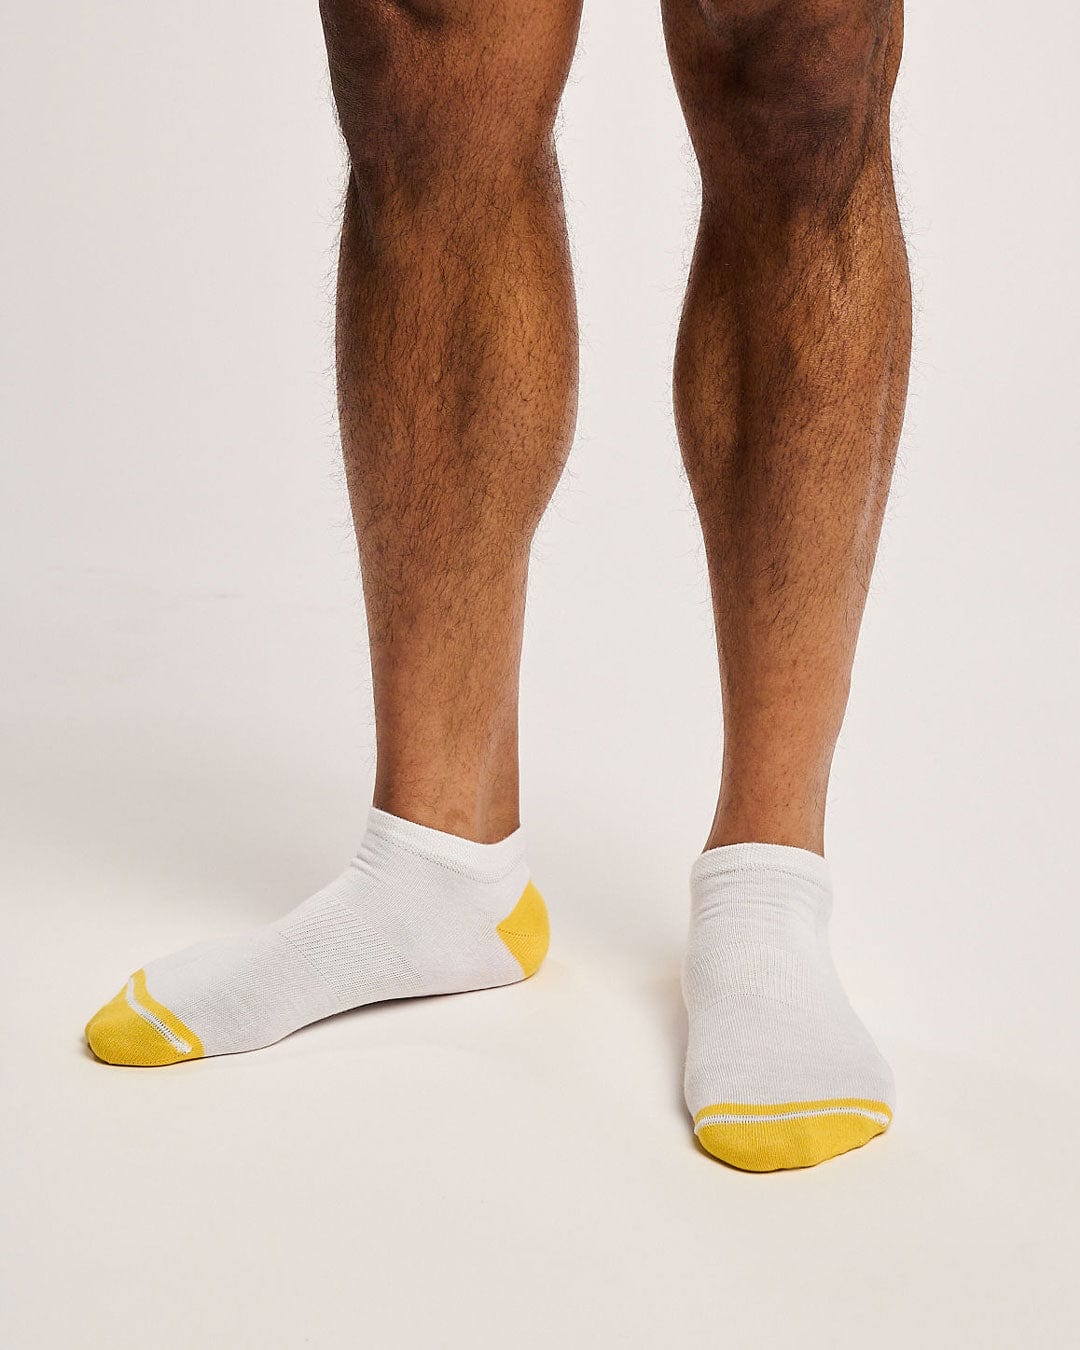 Sustainable white sport socks. Ecofriendly running socks